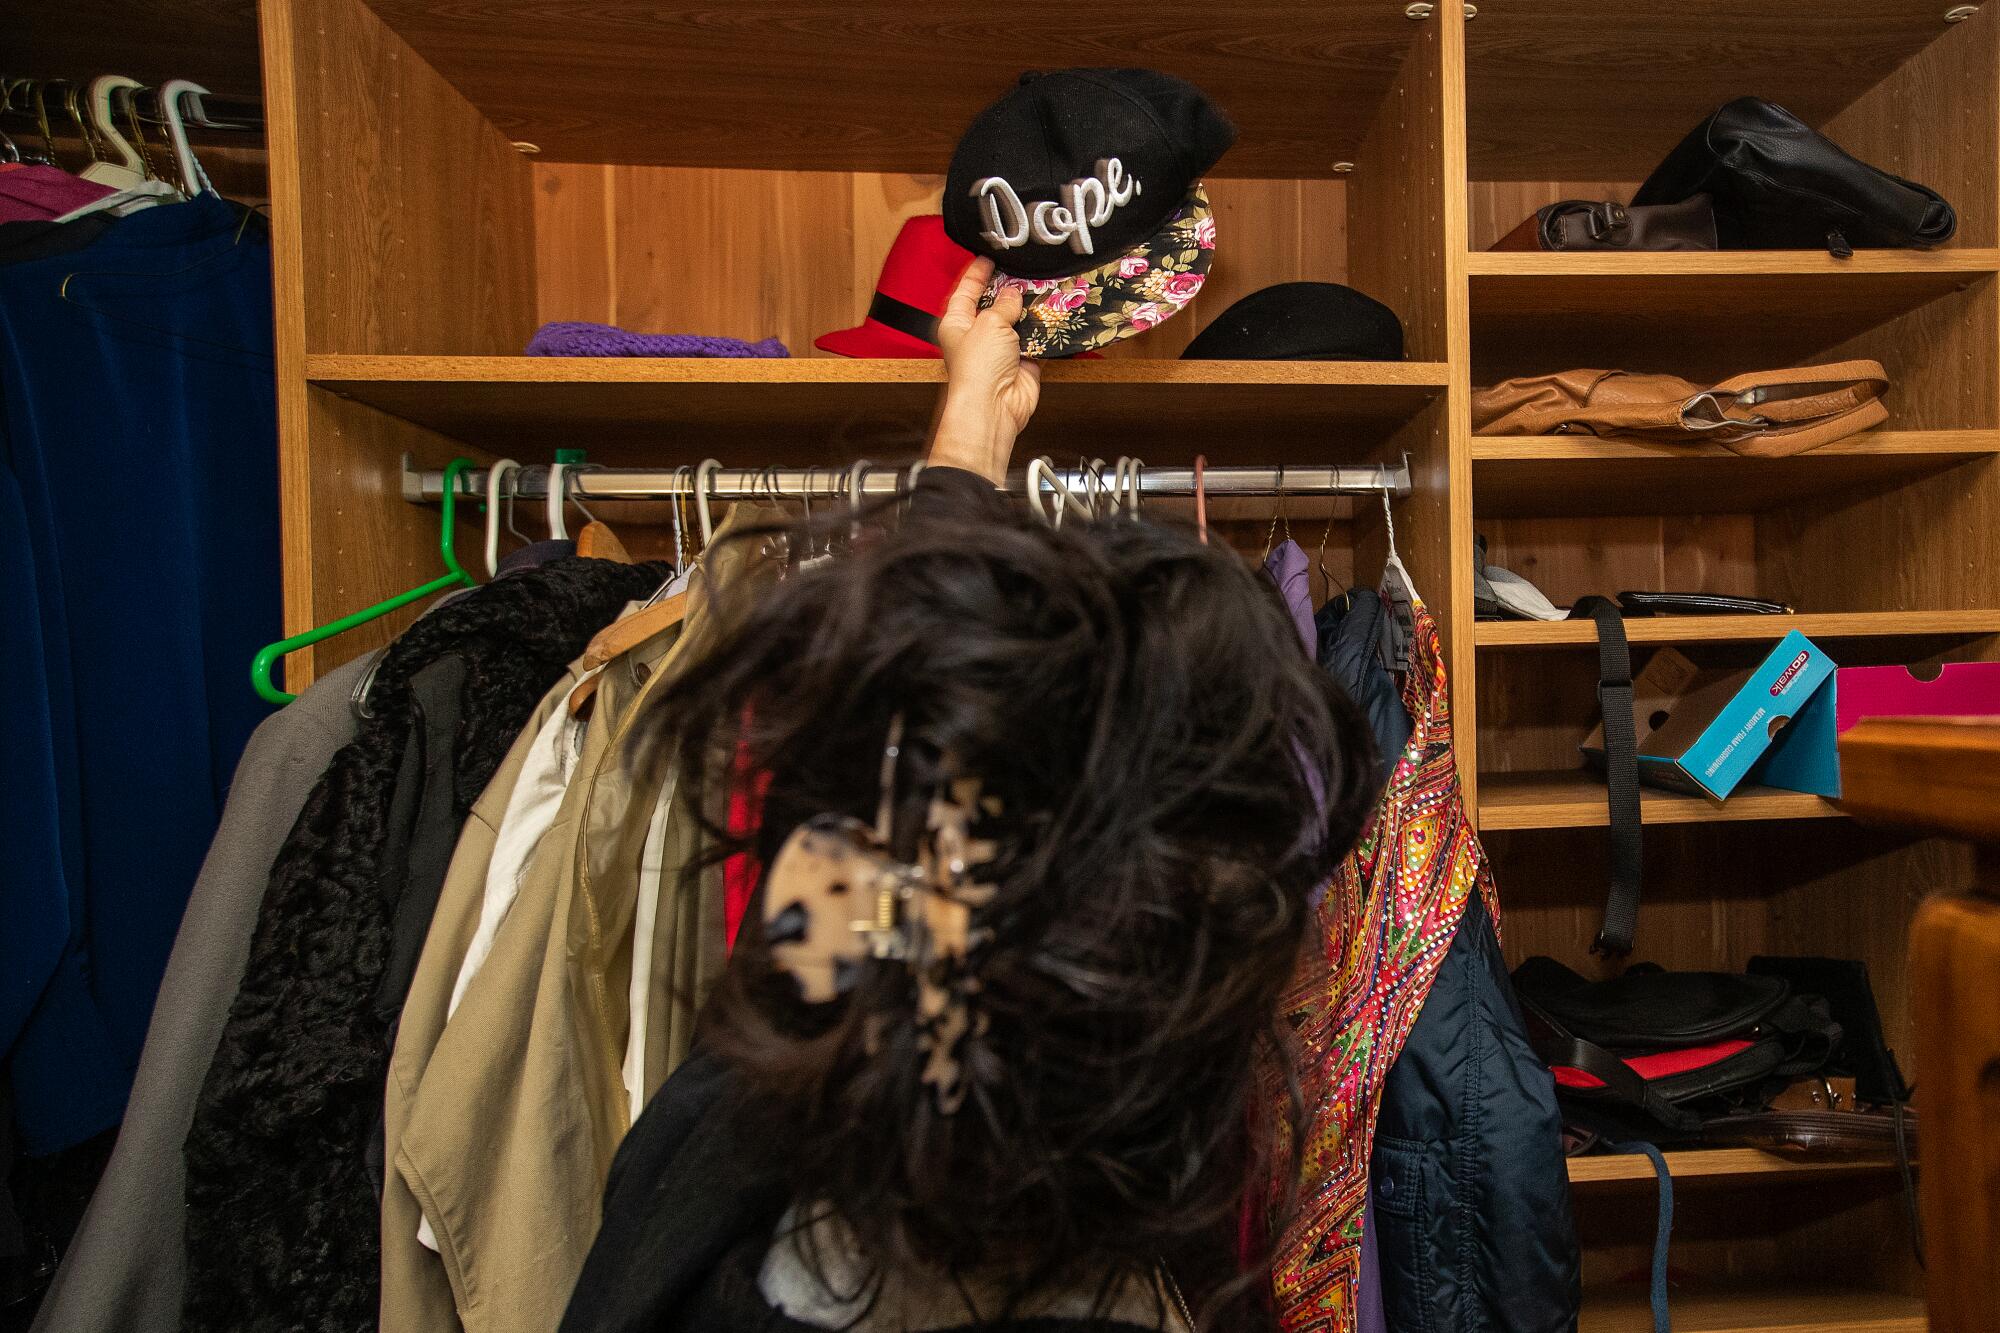 A woman grabbing a baseball cap that reads, "dope" off a high shelf.